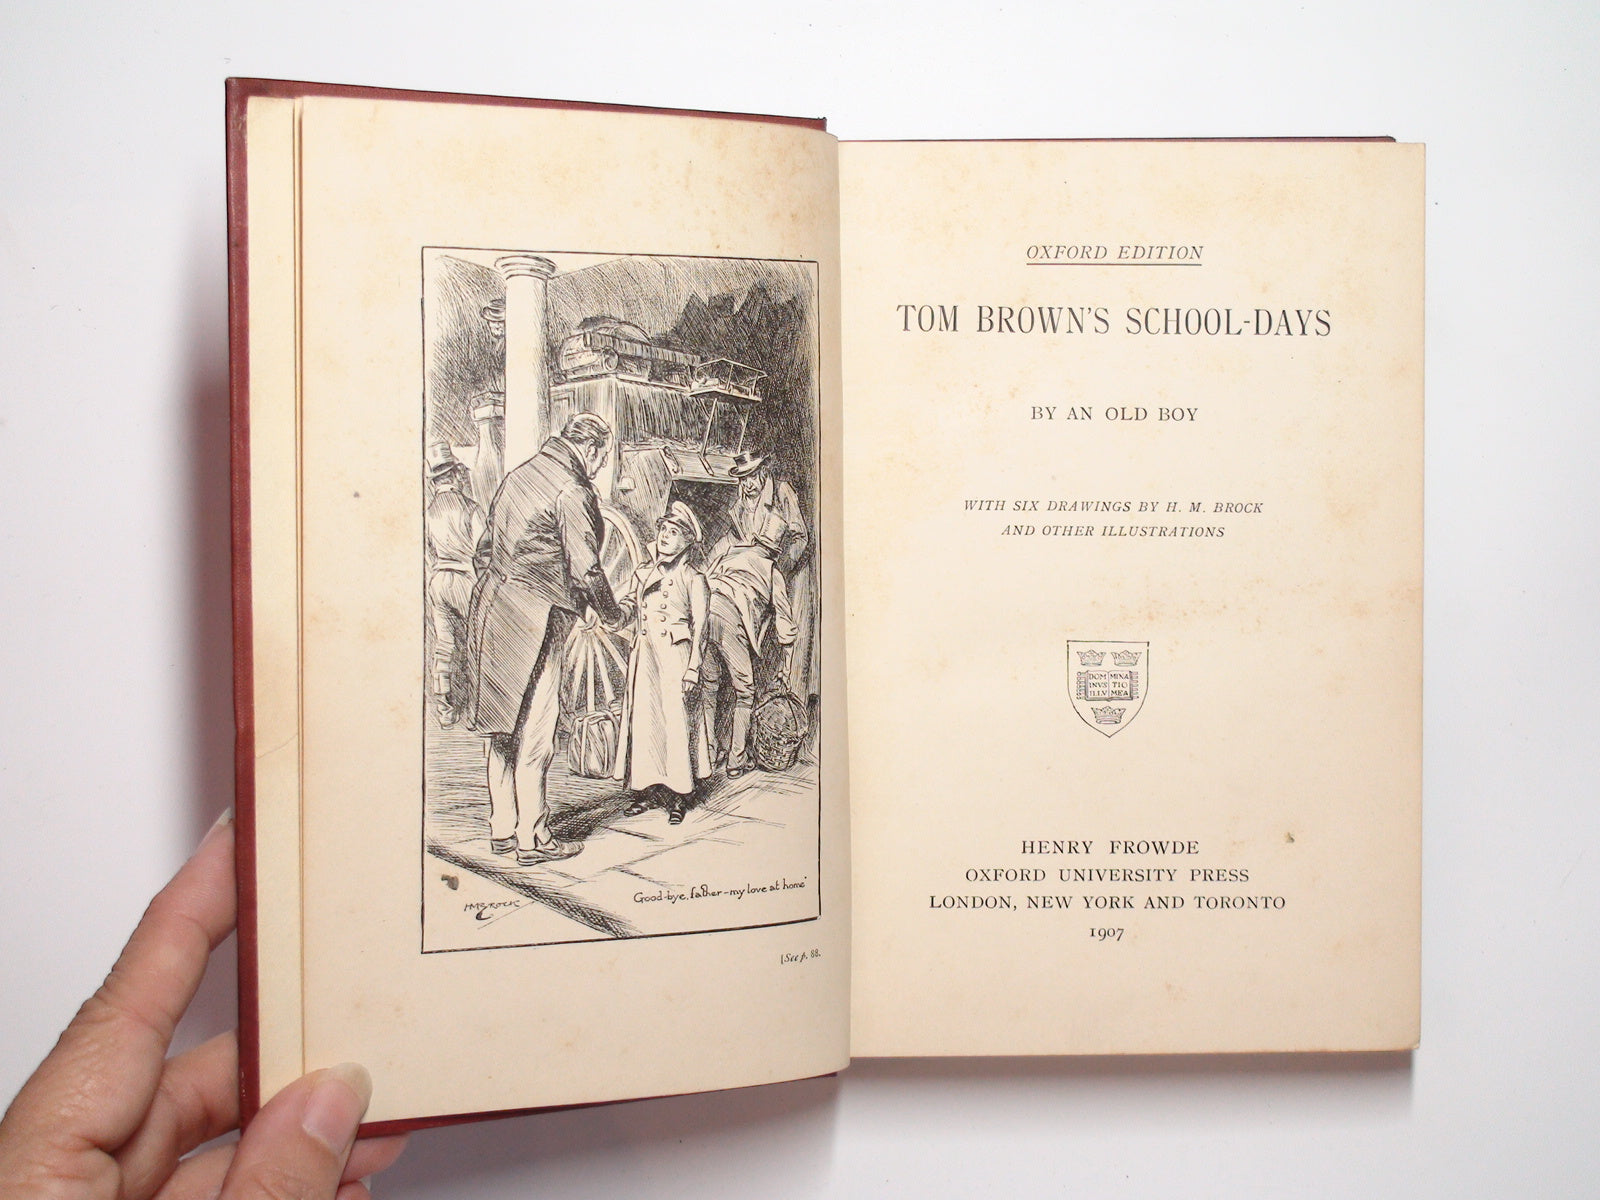 Tom Brown's School-Days, by an Old Boy (Thomas Hughes), Oxford Ed, 1907